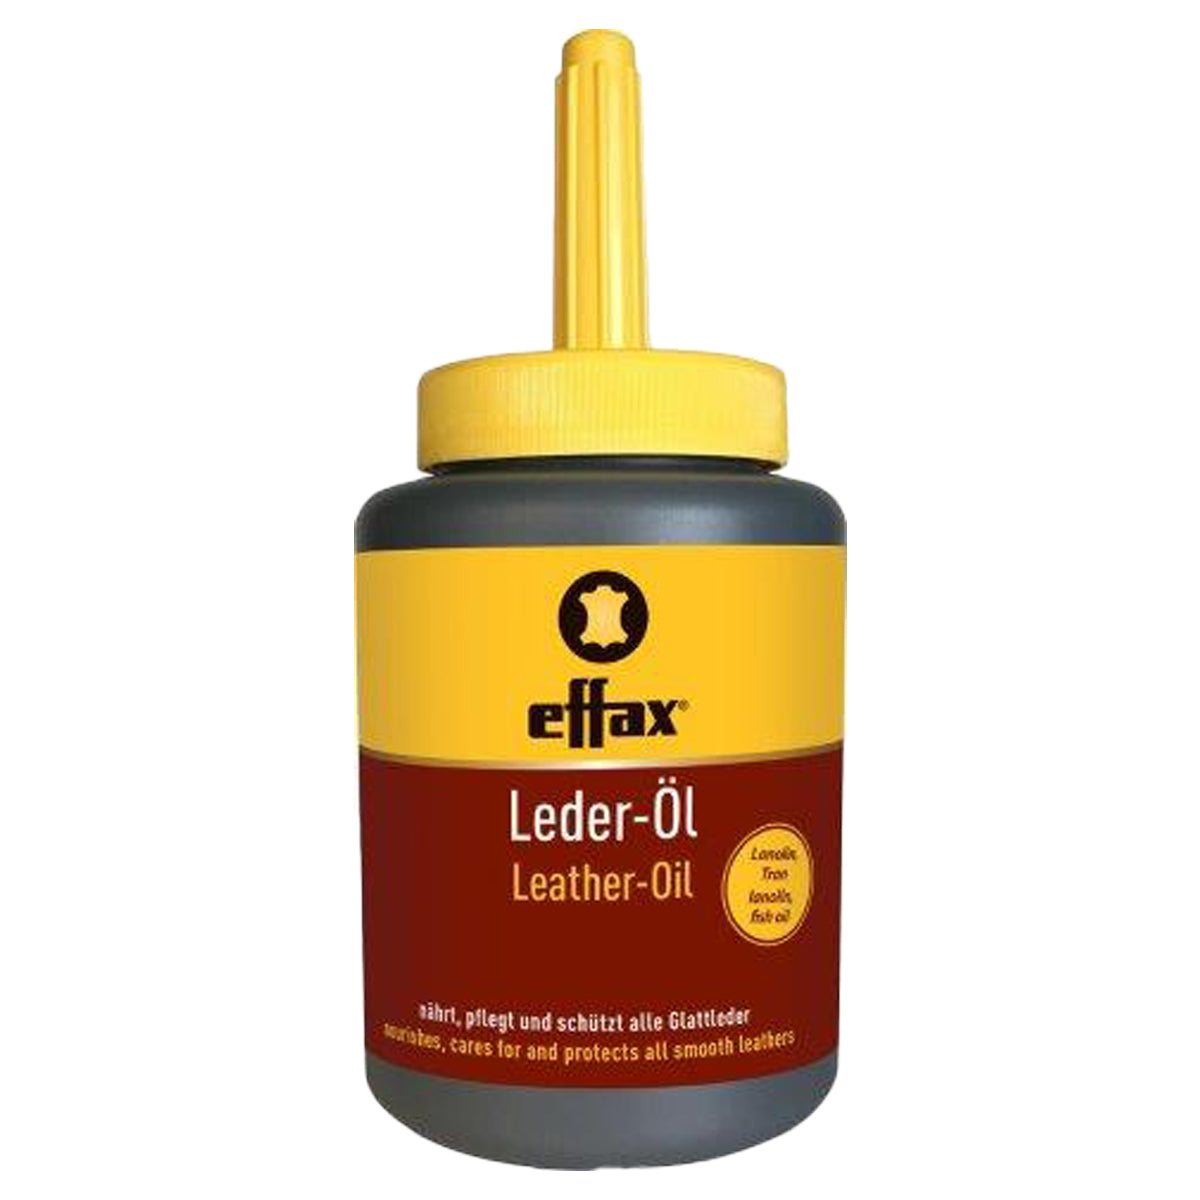 Effax Leather Oil